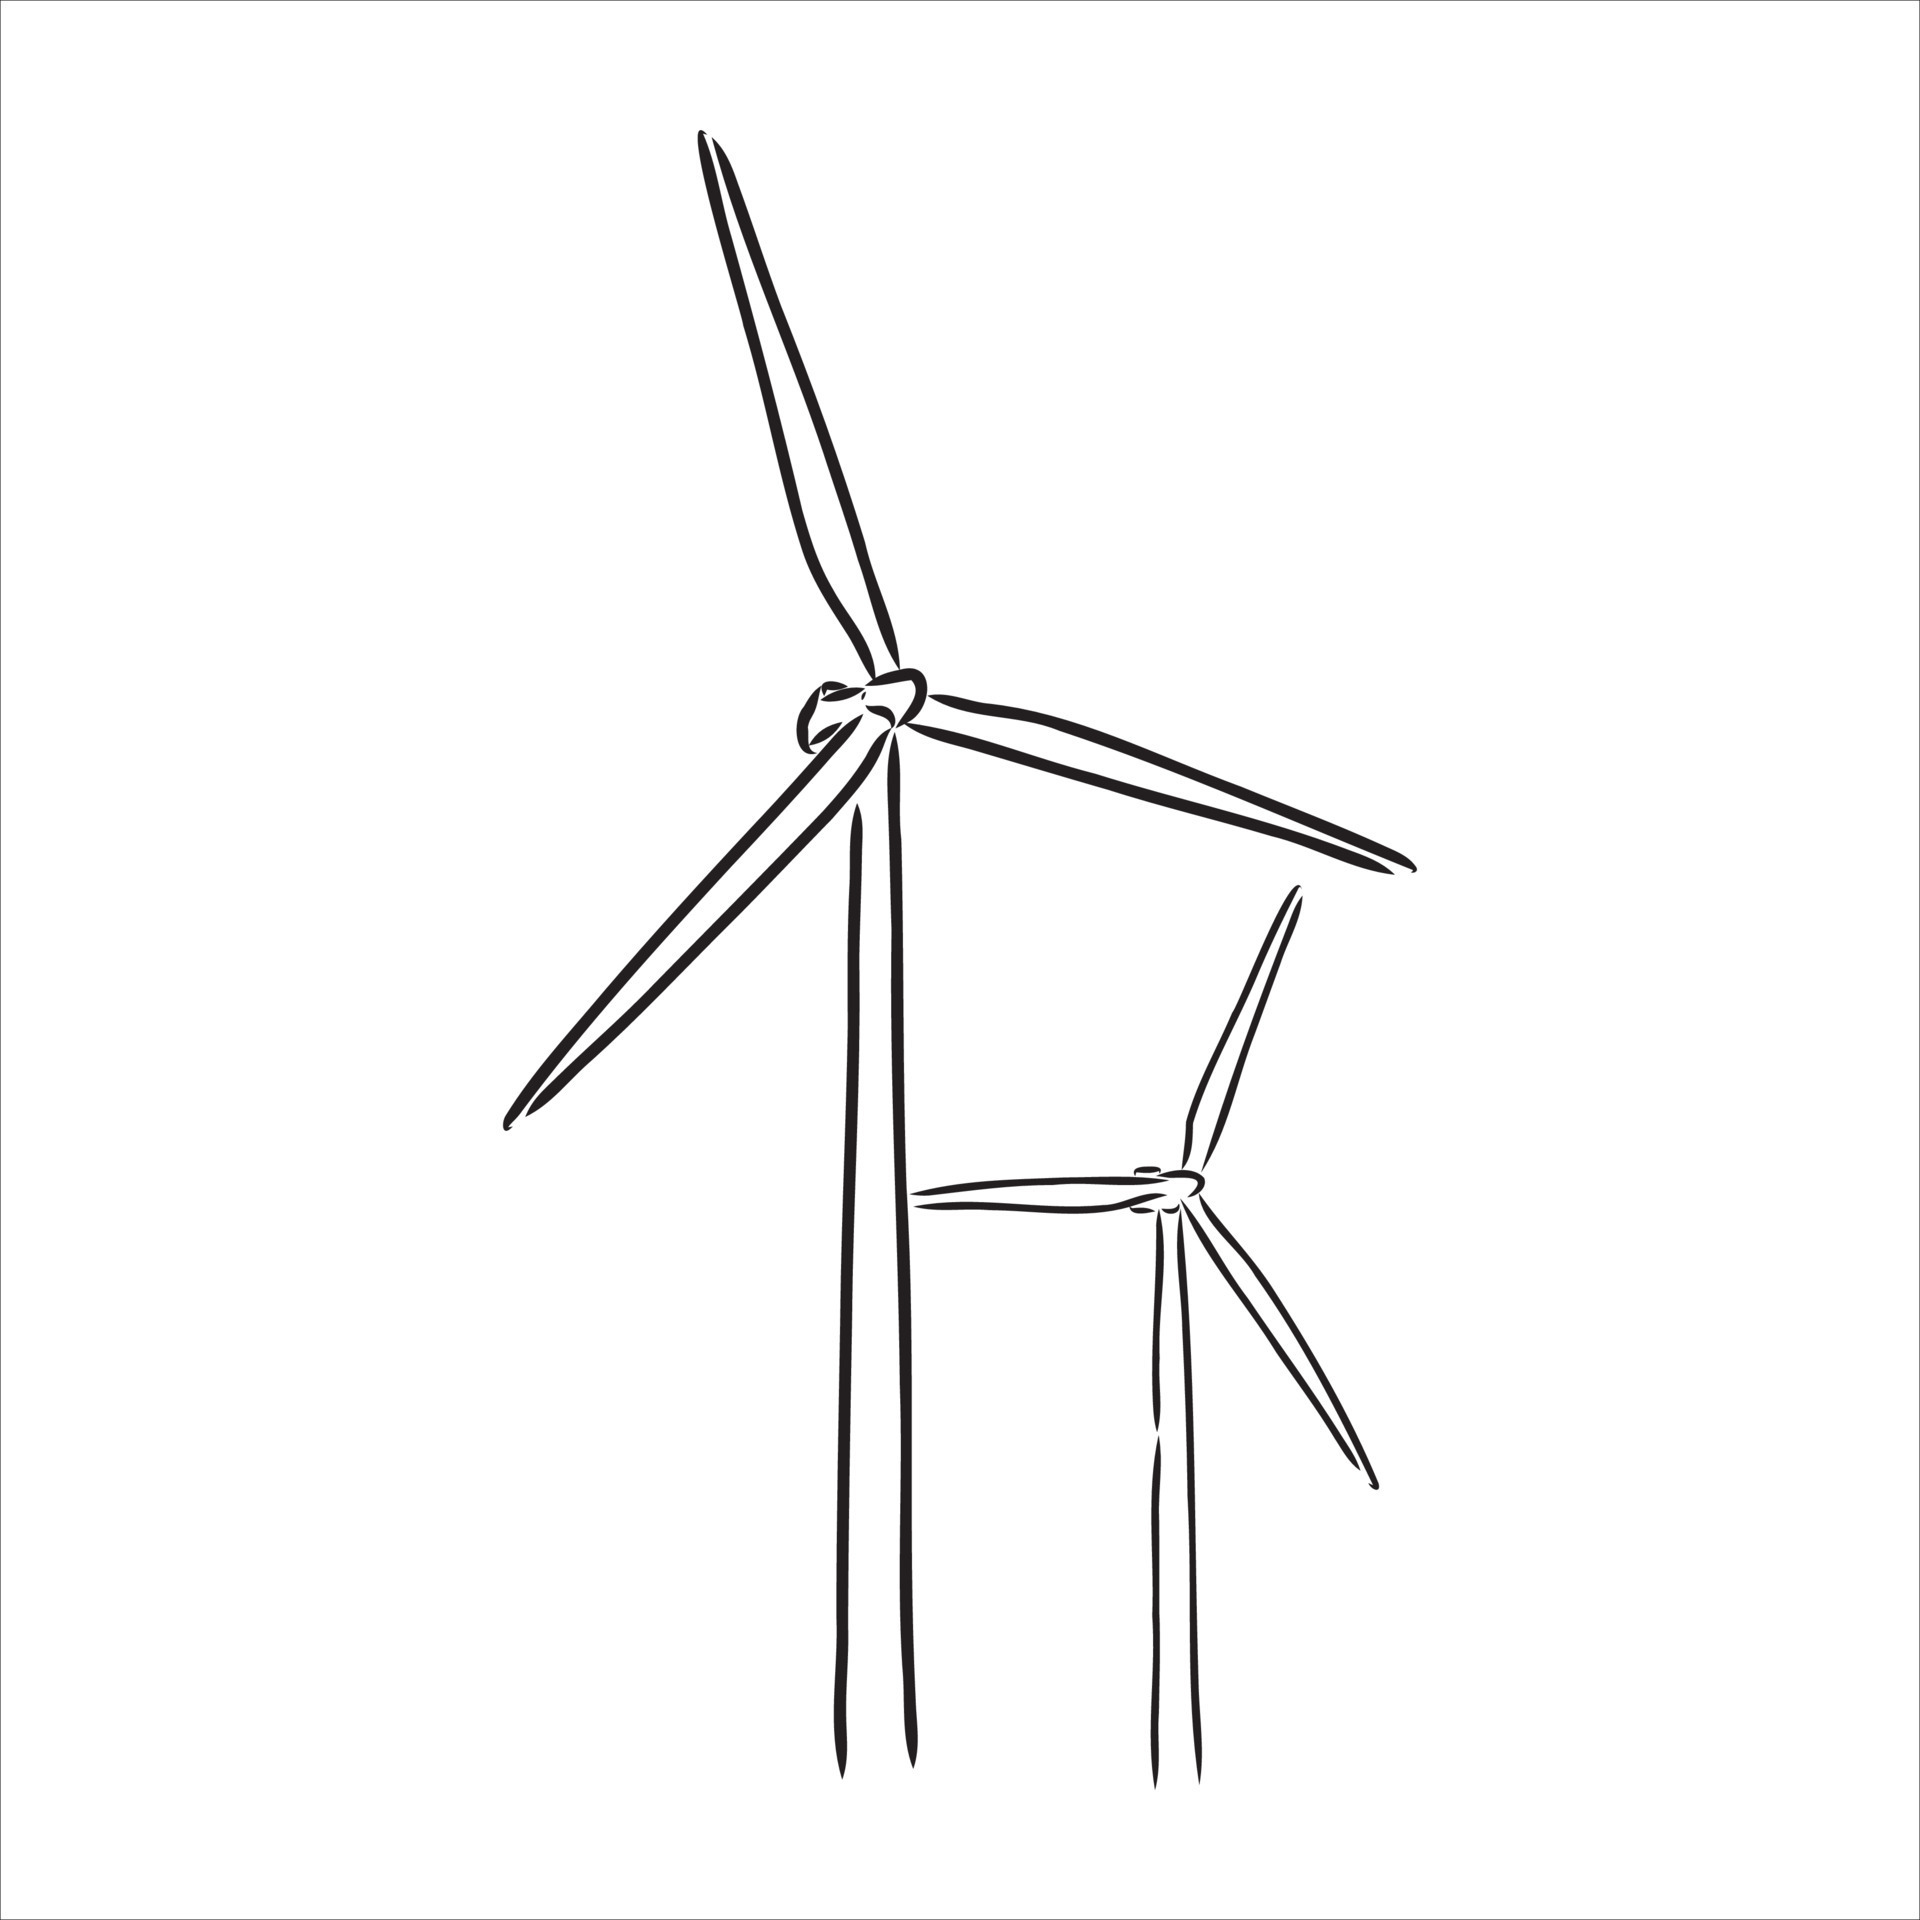 https://static.vecteezy.com/system/resources/previews/007/315/486/original/wind-generator-sketch-vector.jpg